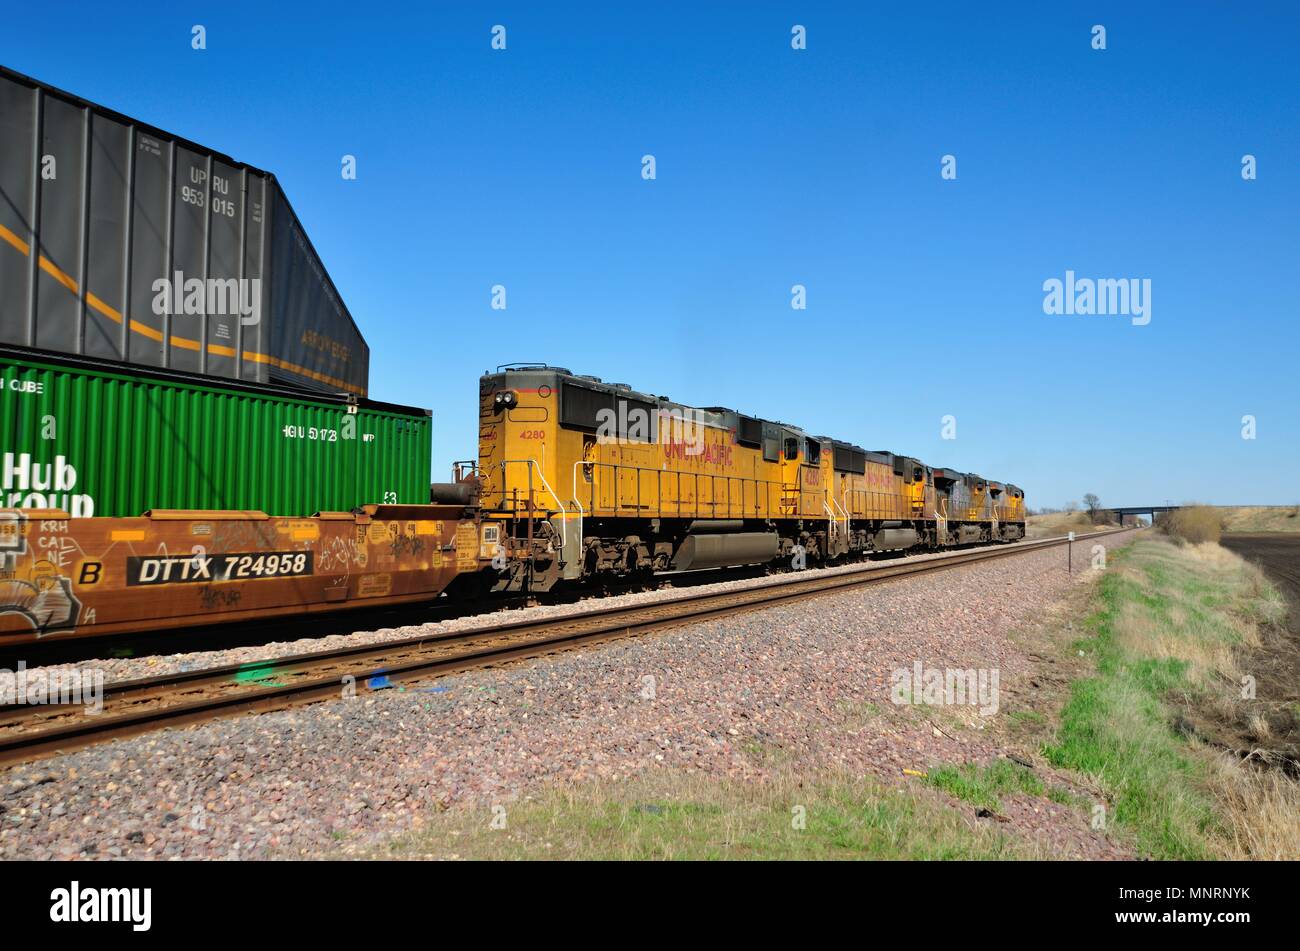 Maple Park, Illinois. A Union Pacific Railroad freight train, lead by four locomotive units, Stock Photo